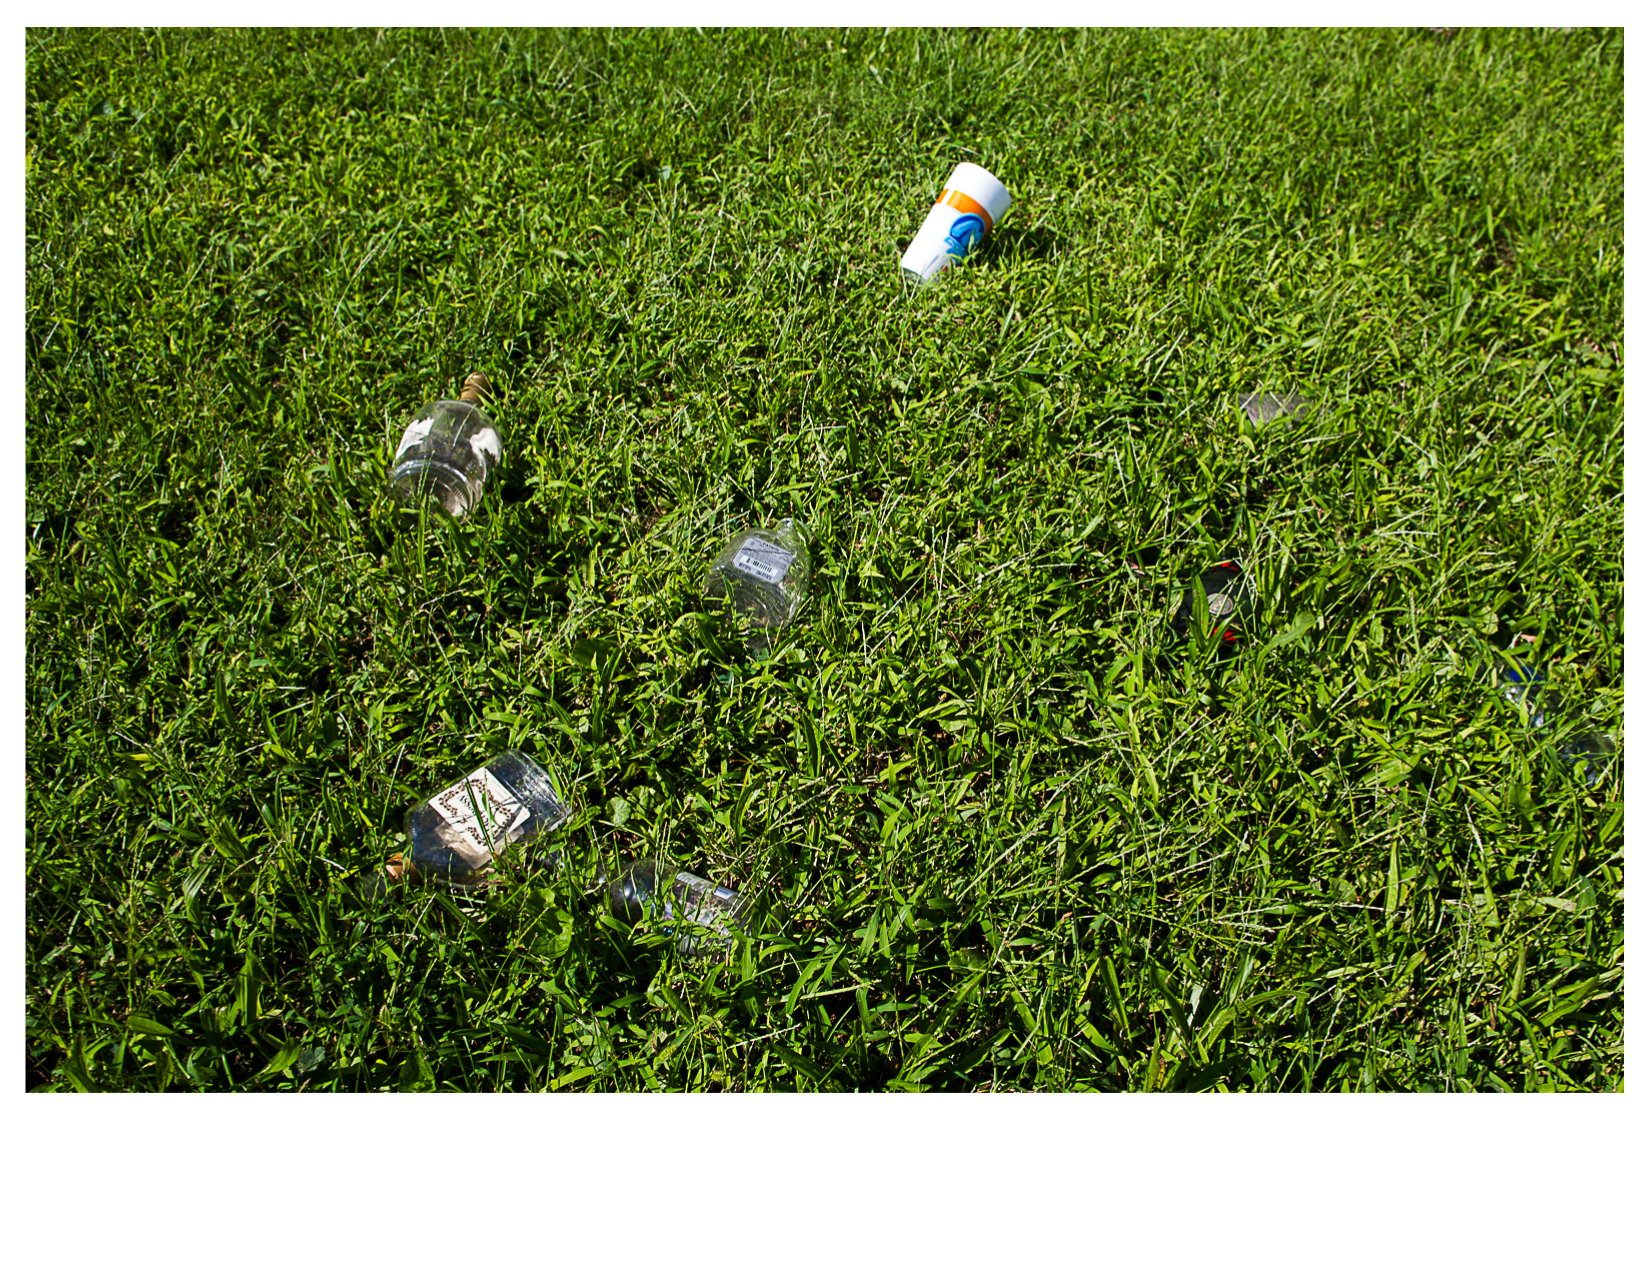 Discarded Liquor Bottles on Lawn, East St. Louis, IL